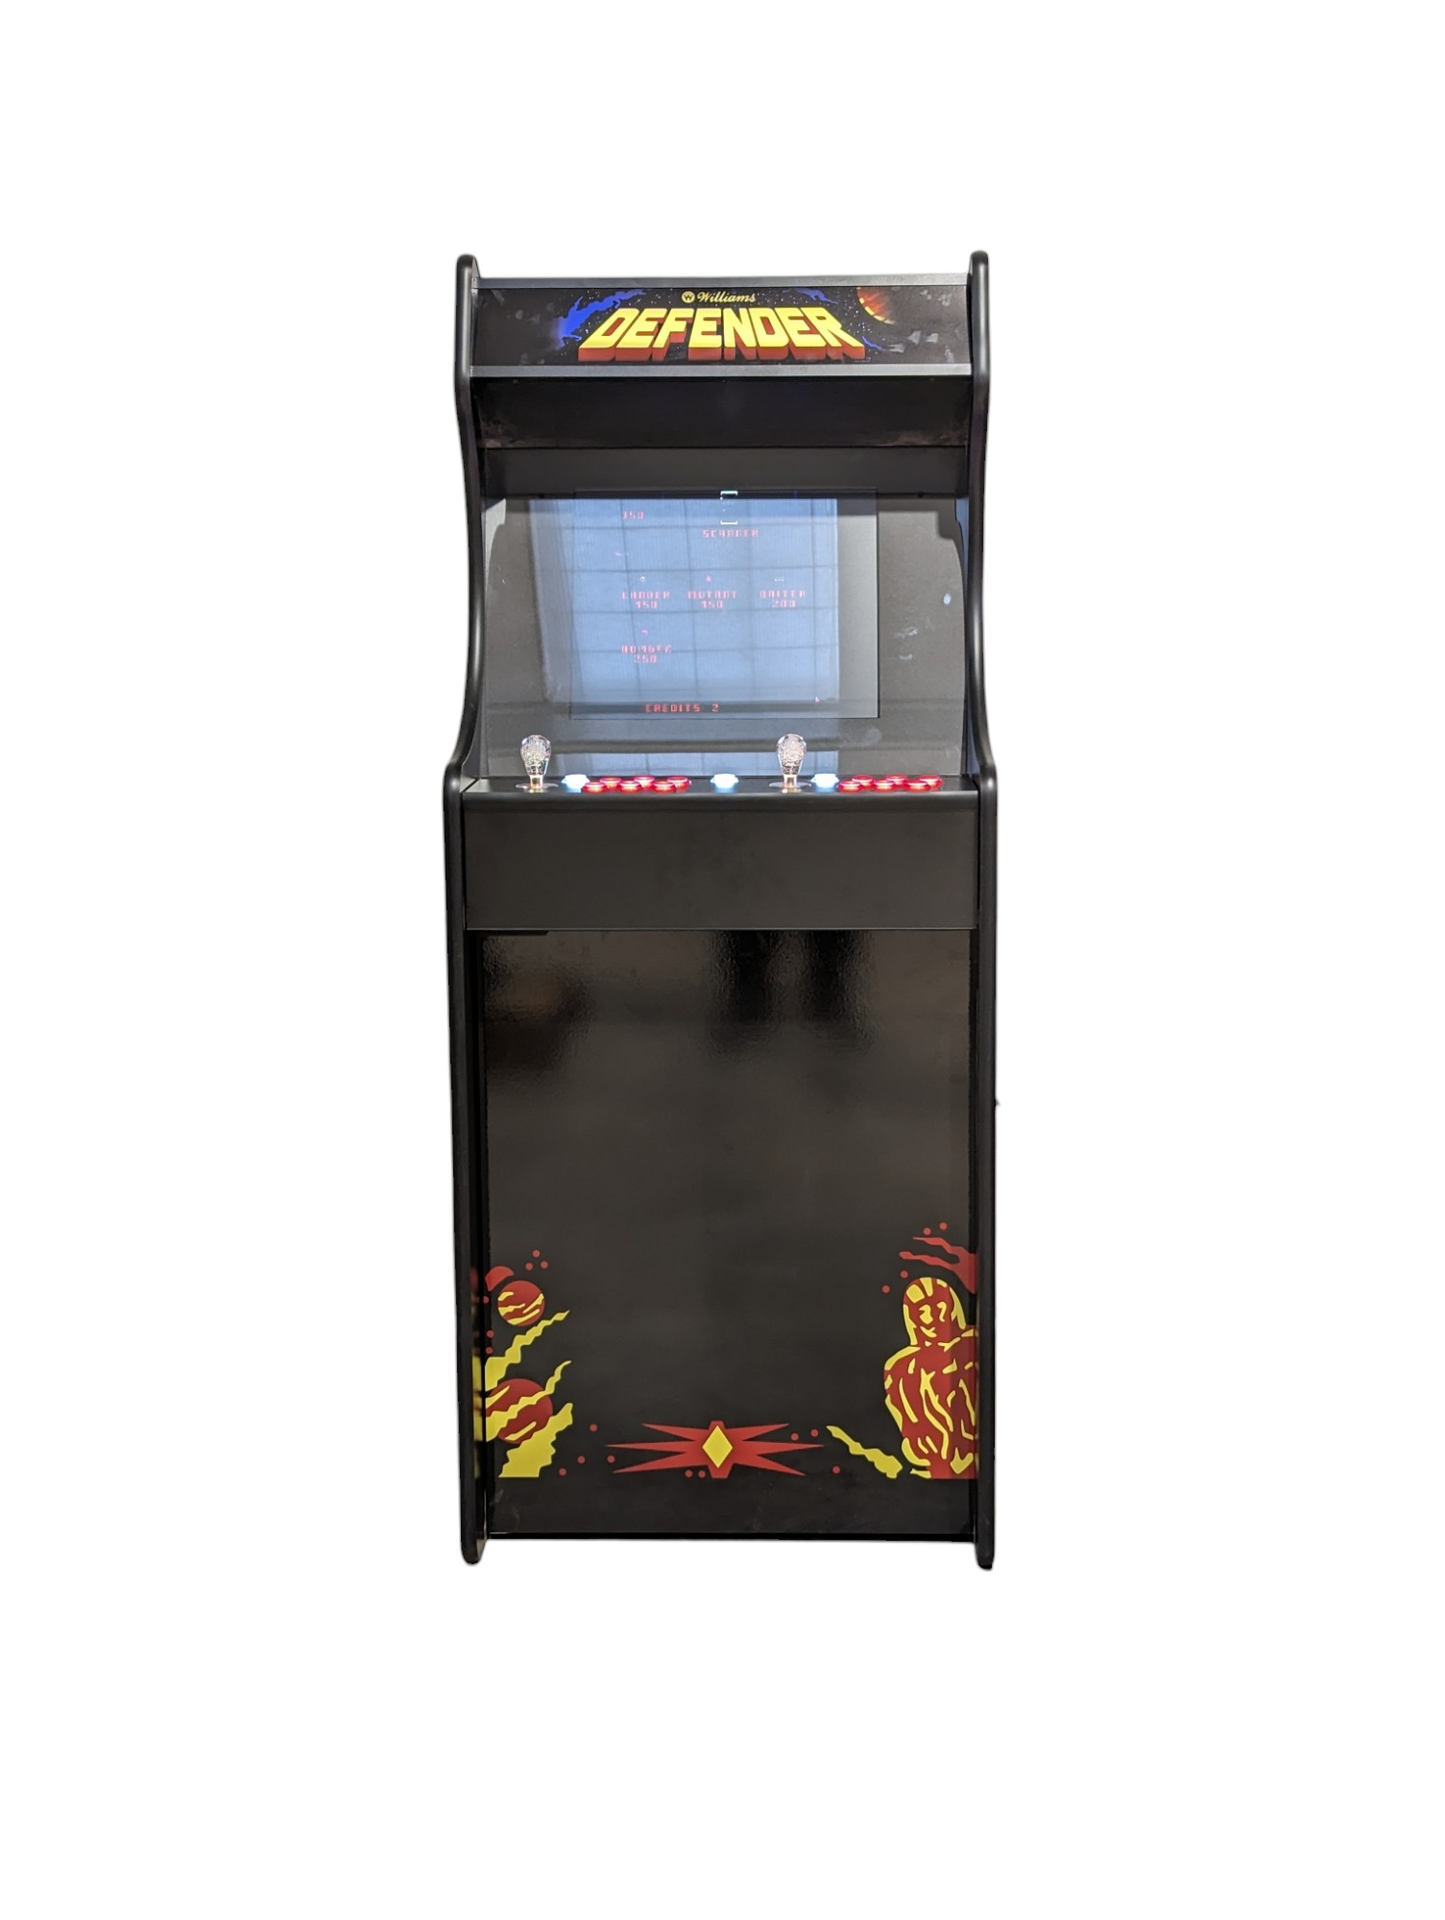 Deluxe 24 Arcade Machine - Defender Theme